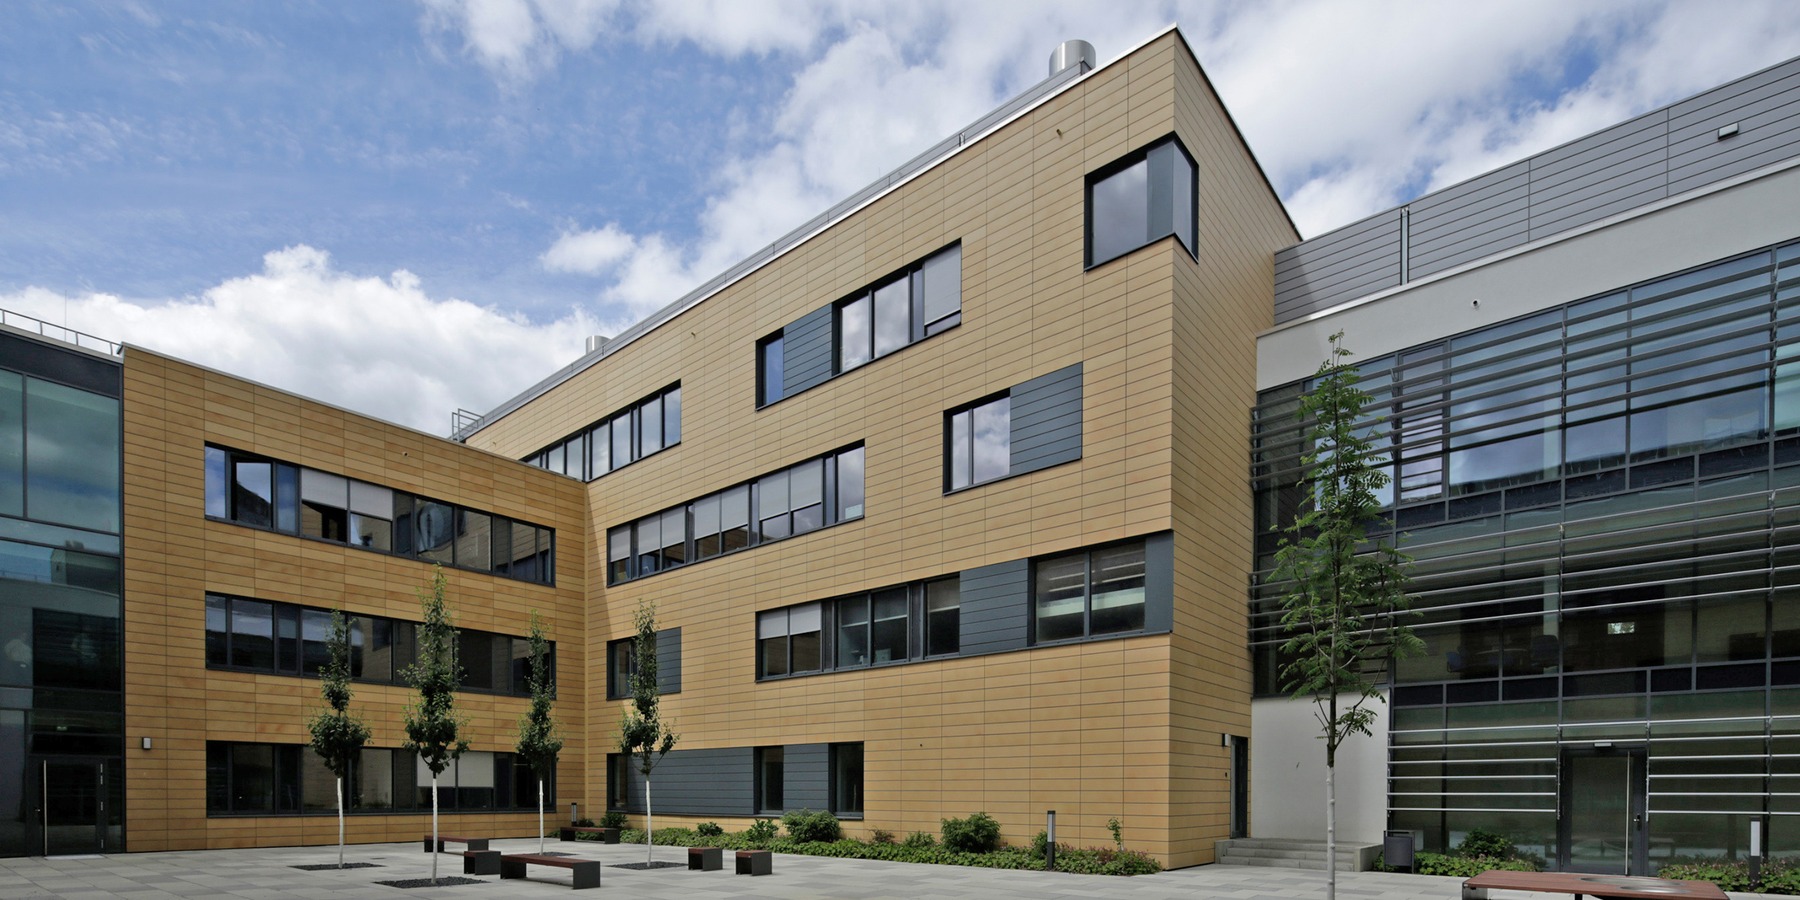 Blick in den Innenhof - rechts das Labor- und Praktikumsgebäude, links das Forschungsgebäude C_DAT © 2015 Christian Hoffmann, FM M-V